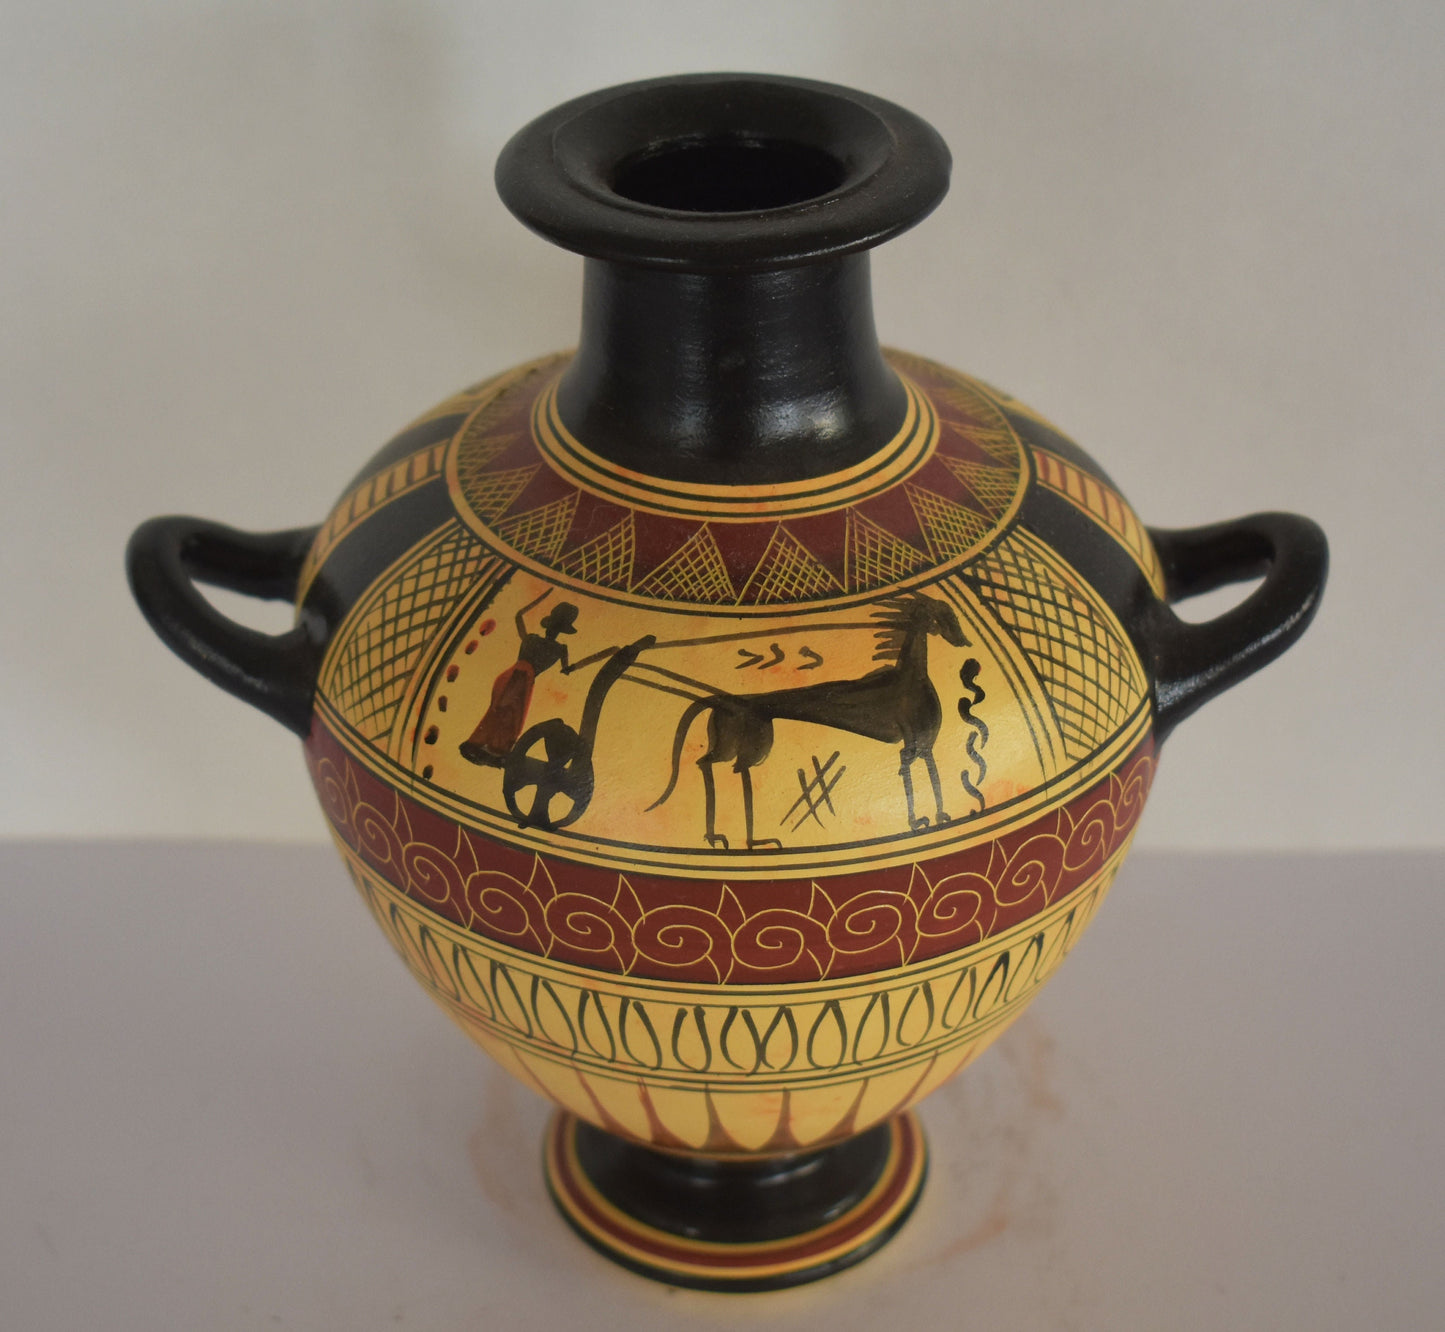 Geometric period Vessel - 900-700 BC - Man on a Chariot and Floral Design - Attica, Athens - Ceramic Vase